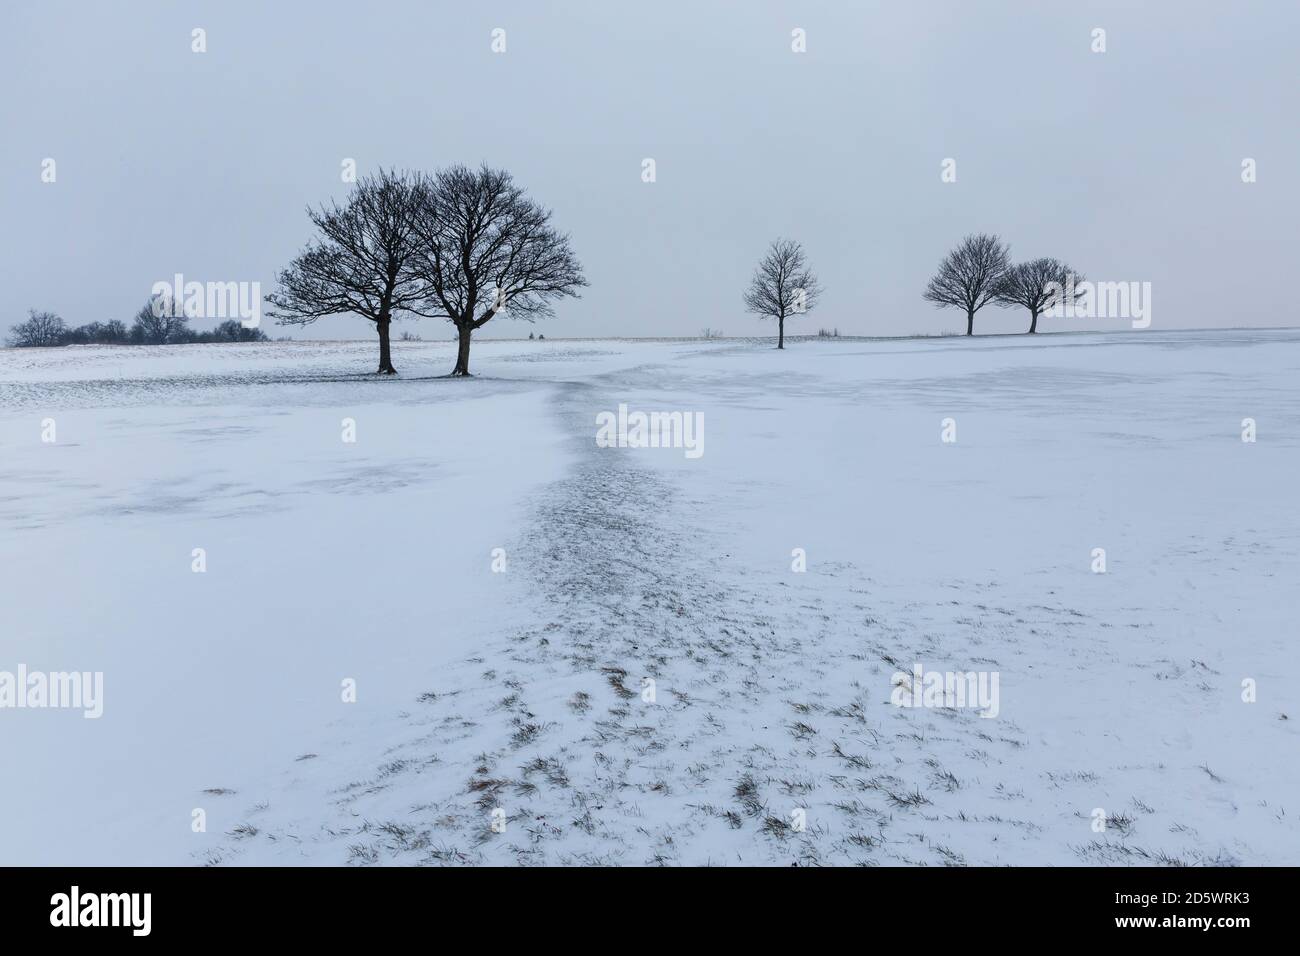 Trees on a flat snowy landscape in winter Stock Photo